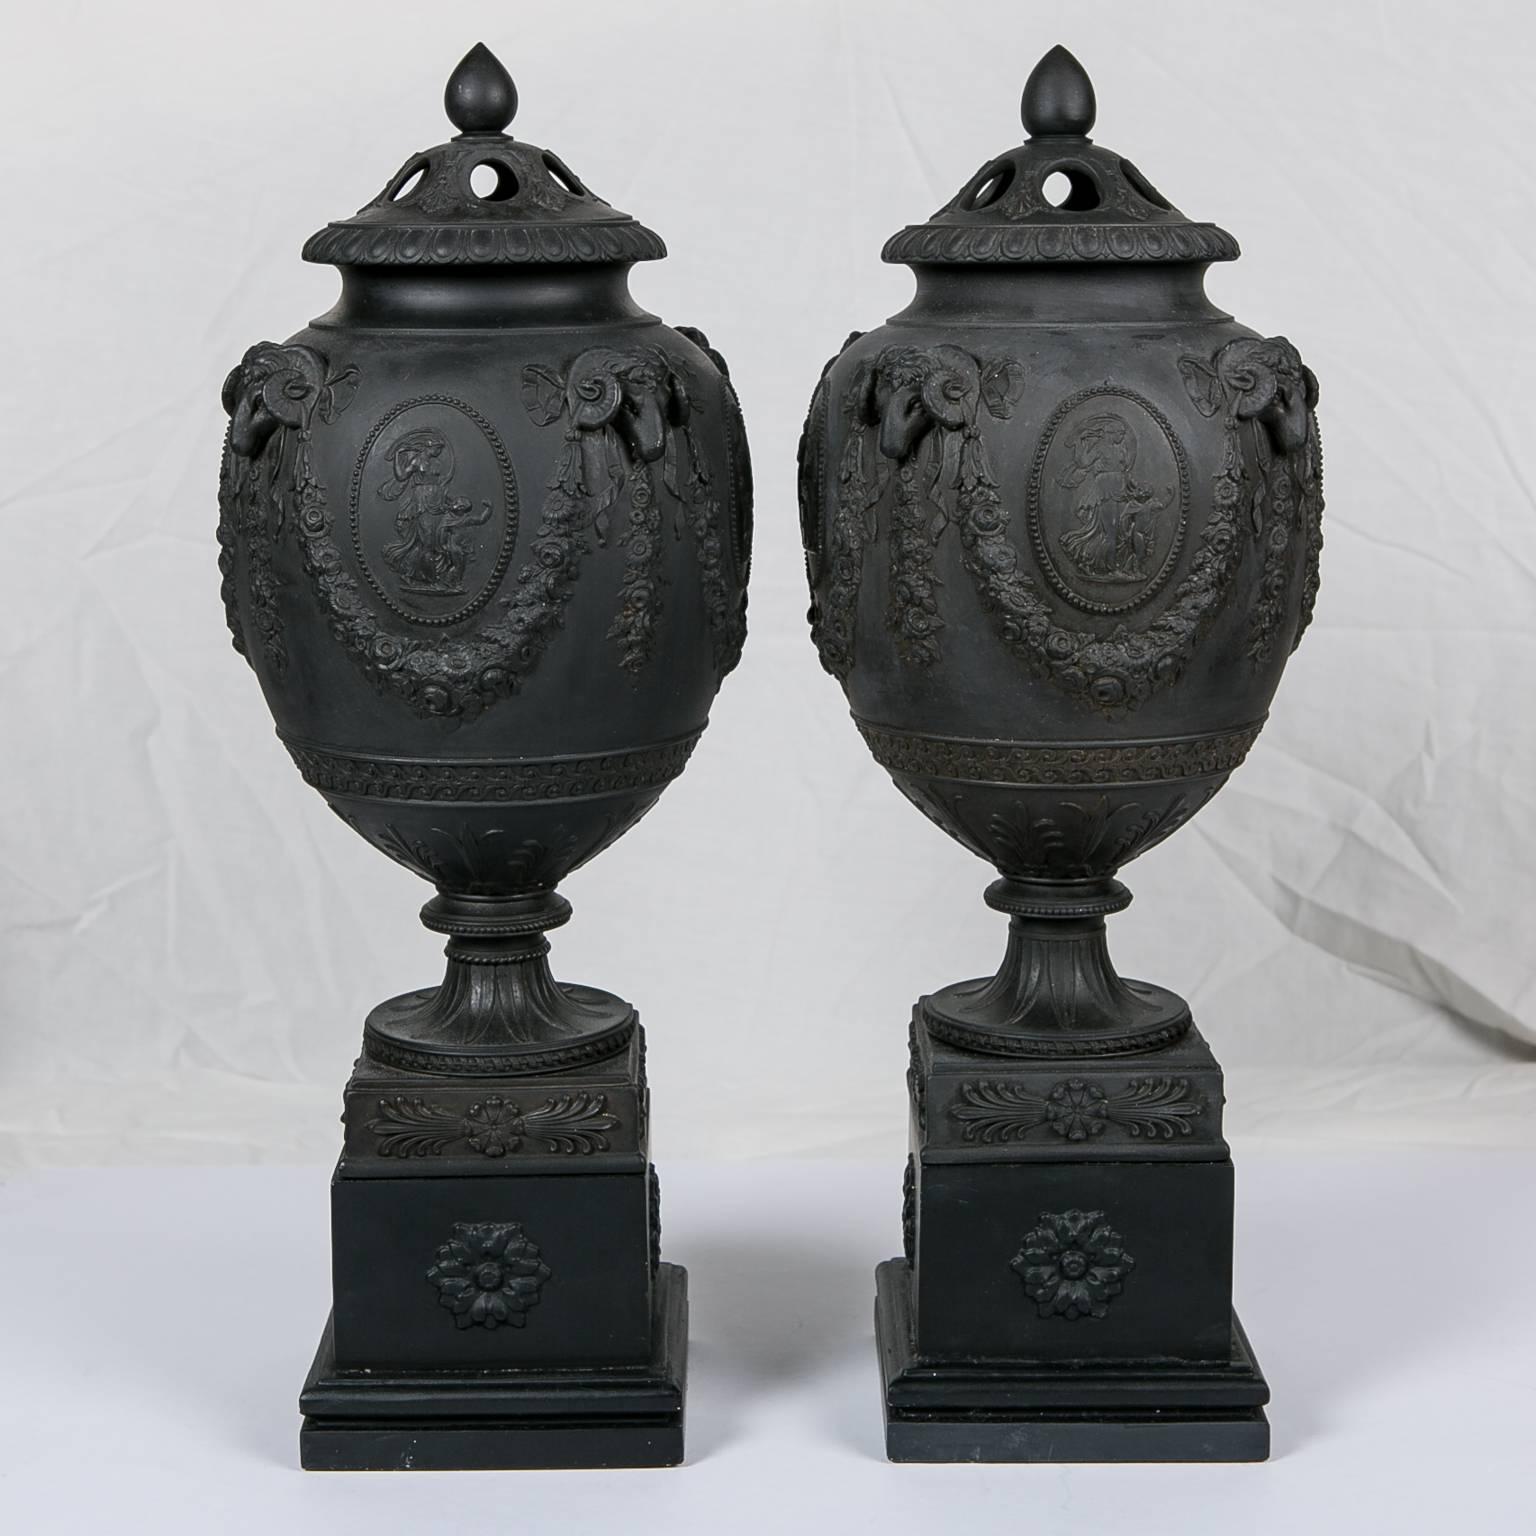 19th Century Wedgwood Black Basalt Urns Made in England circa 1820